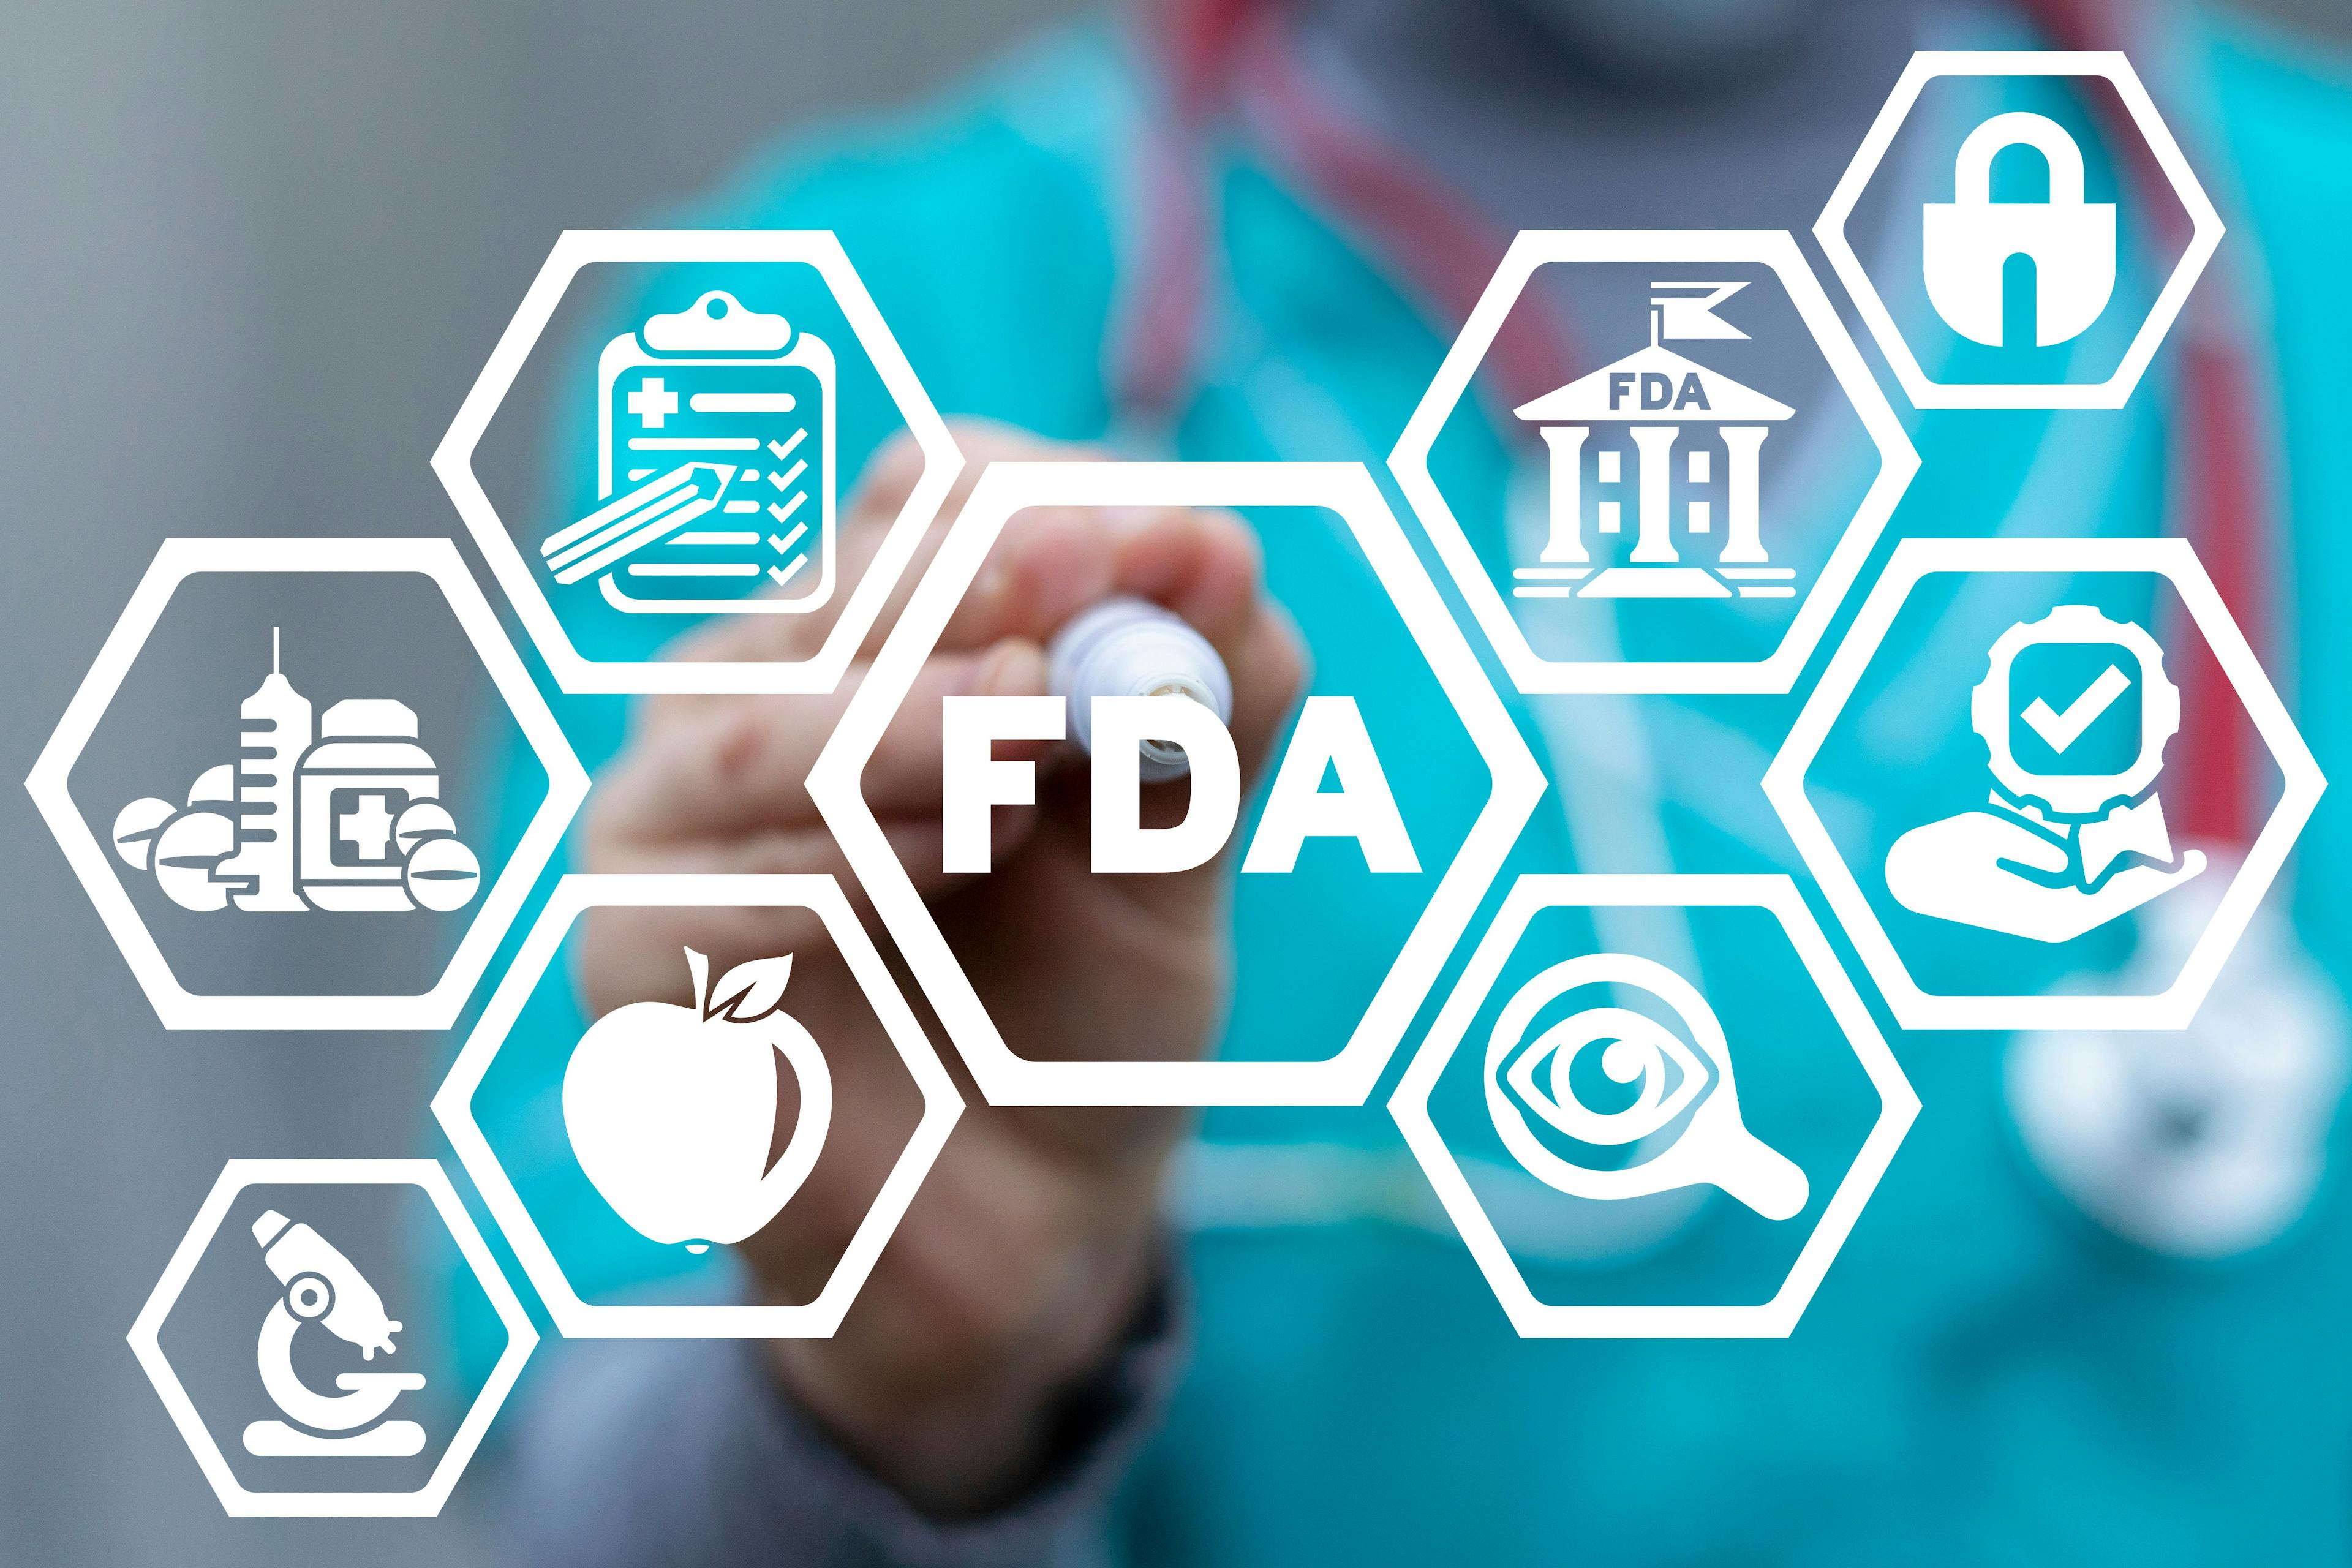 Concept of FDA Food and Drug Administration | Image Credit: wladimir1804 - stock.adobe.com